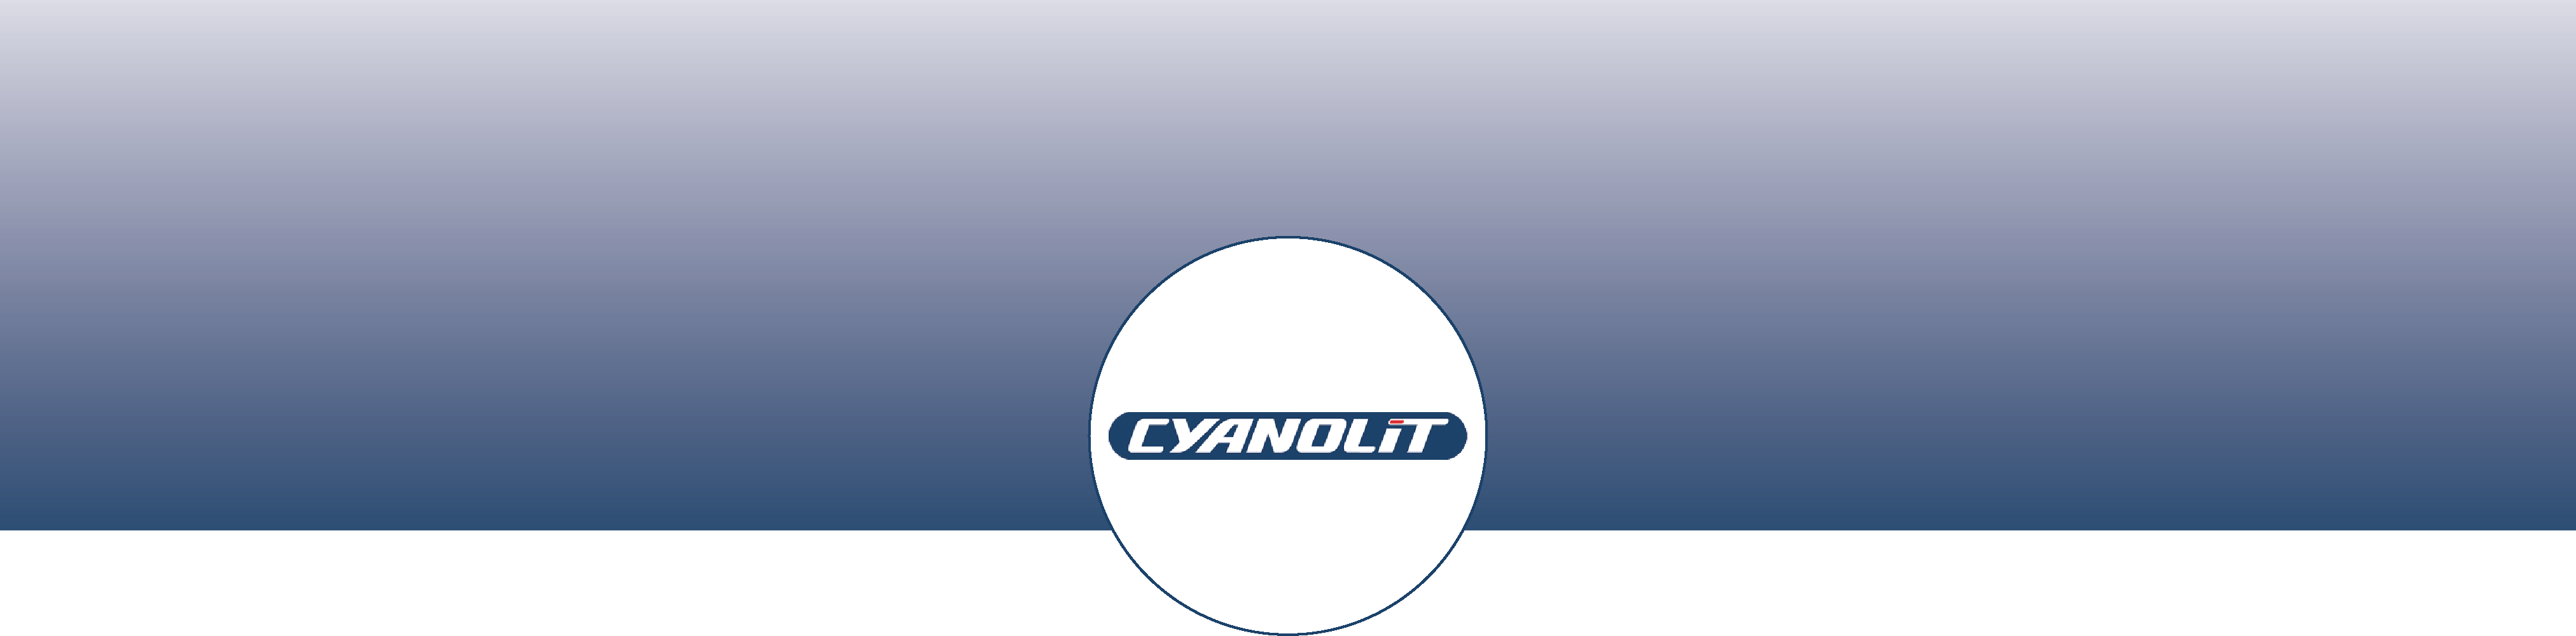 banner_cyanolit